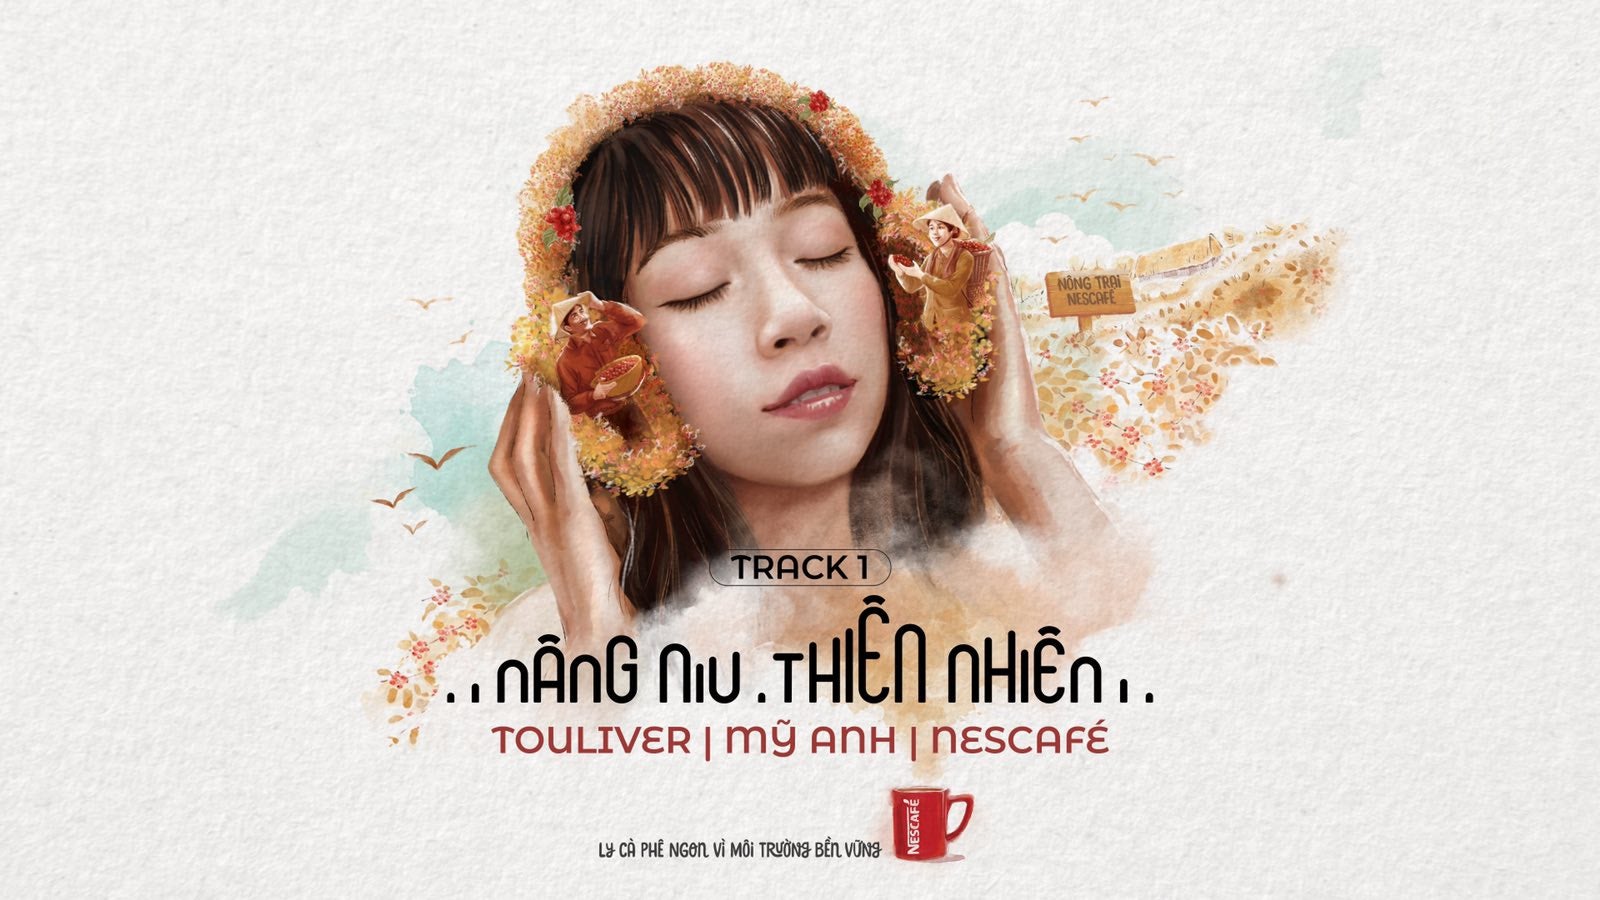  nang-niu-lam-thien-nhien-oi_track1_thumbnail